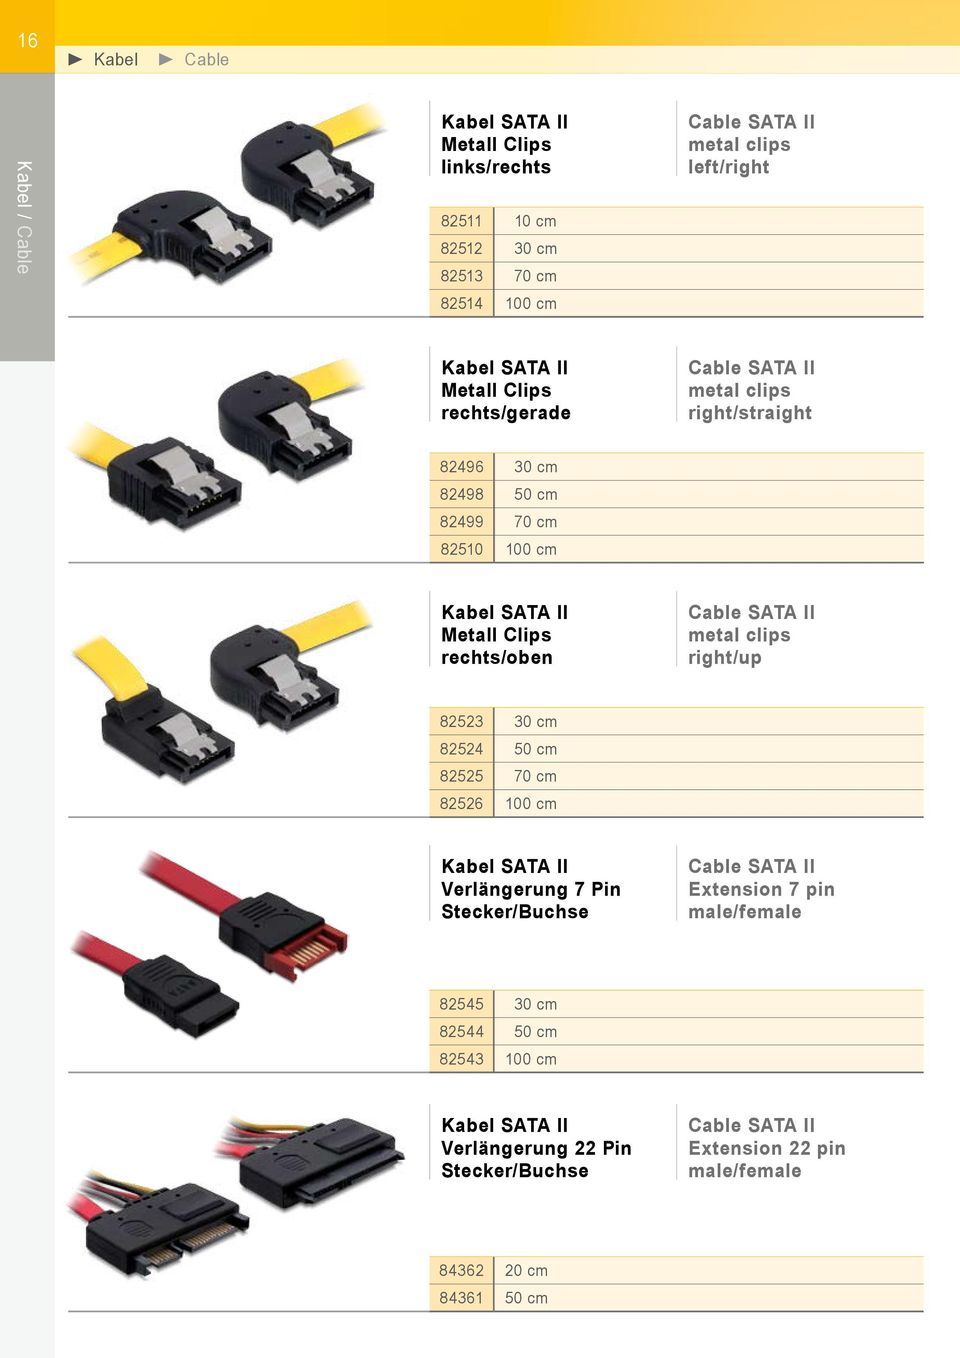 rechts/oben Cable SATA II metal clips right/up 82523 30 cm 82524 50 cm 82525 70 cm 82526 100 cm Kabel SATA II Verlängerung 7 Pin Stecker/Buchse Cable SATA II